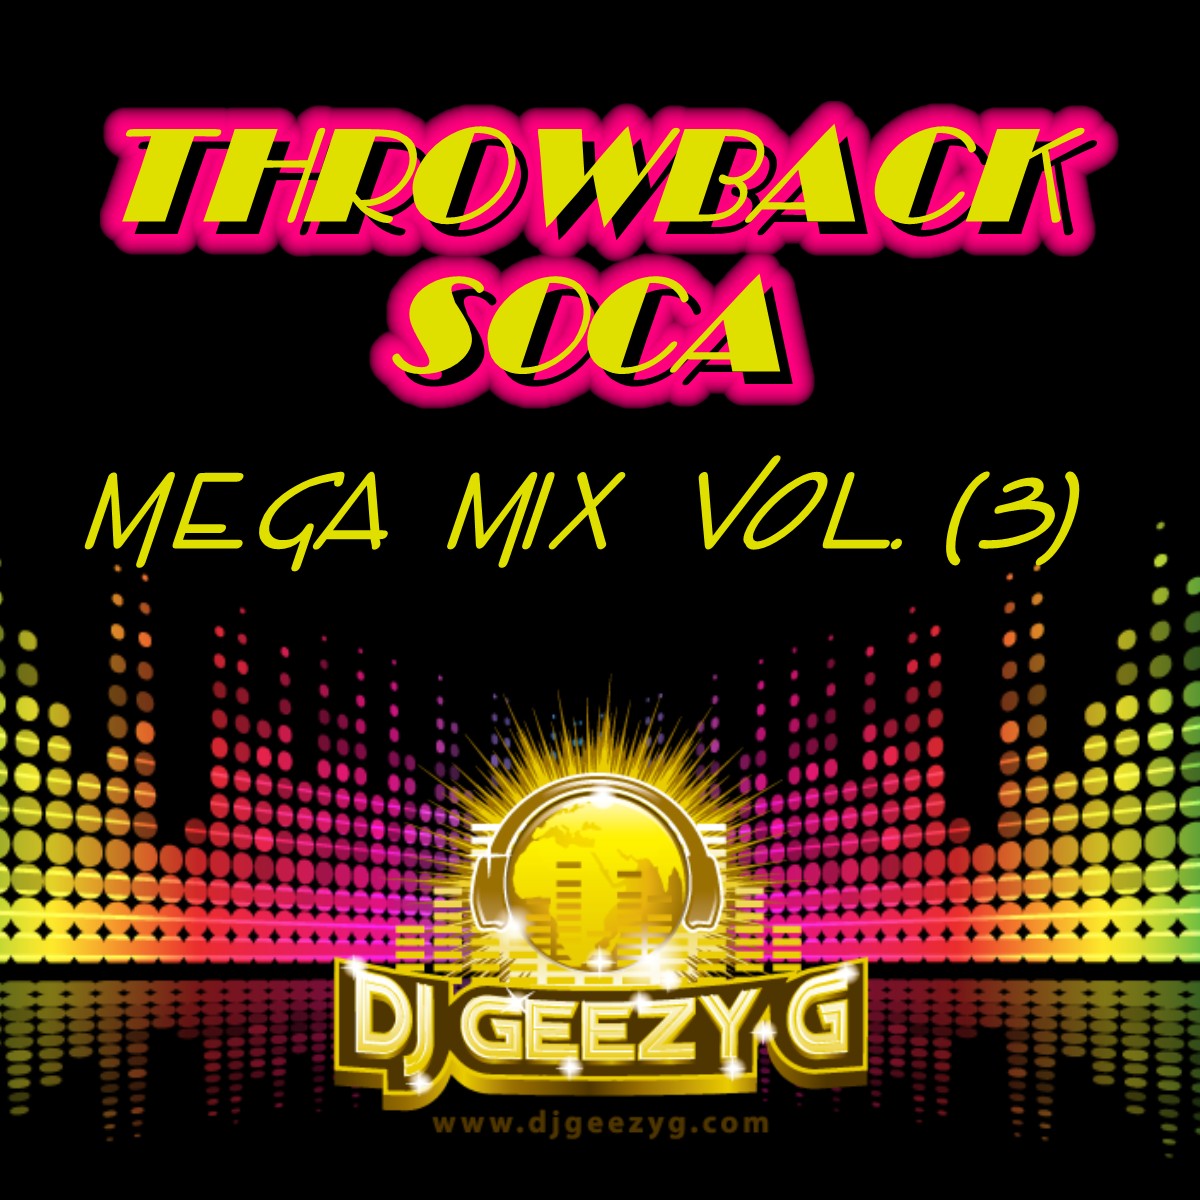 DJ GEEZY G - THROWBACK SOCA MEGA MIX VOLUME (3)